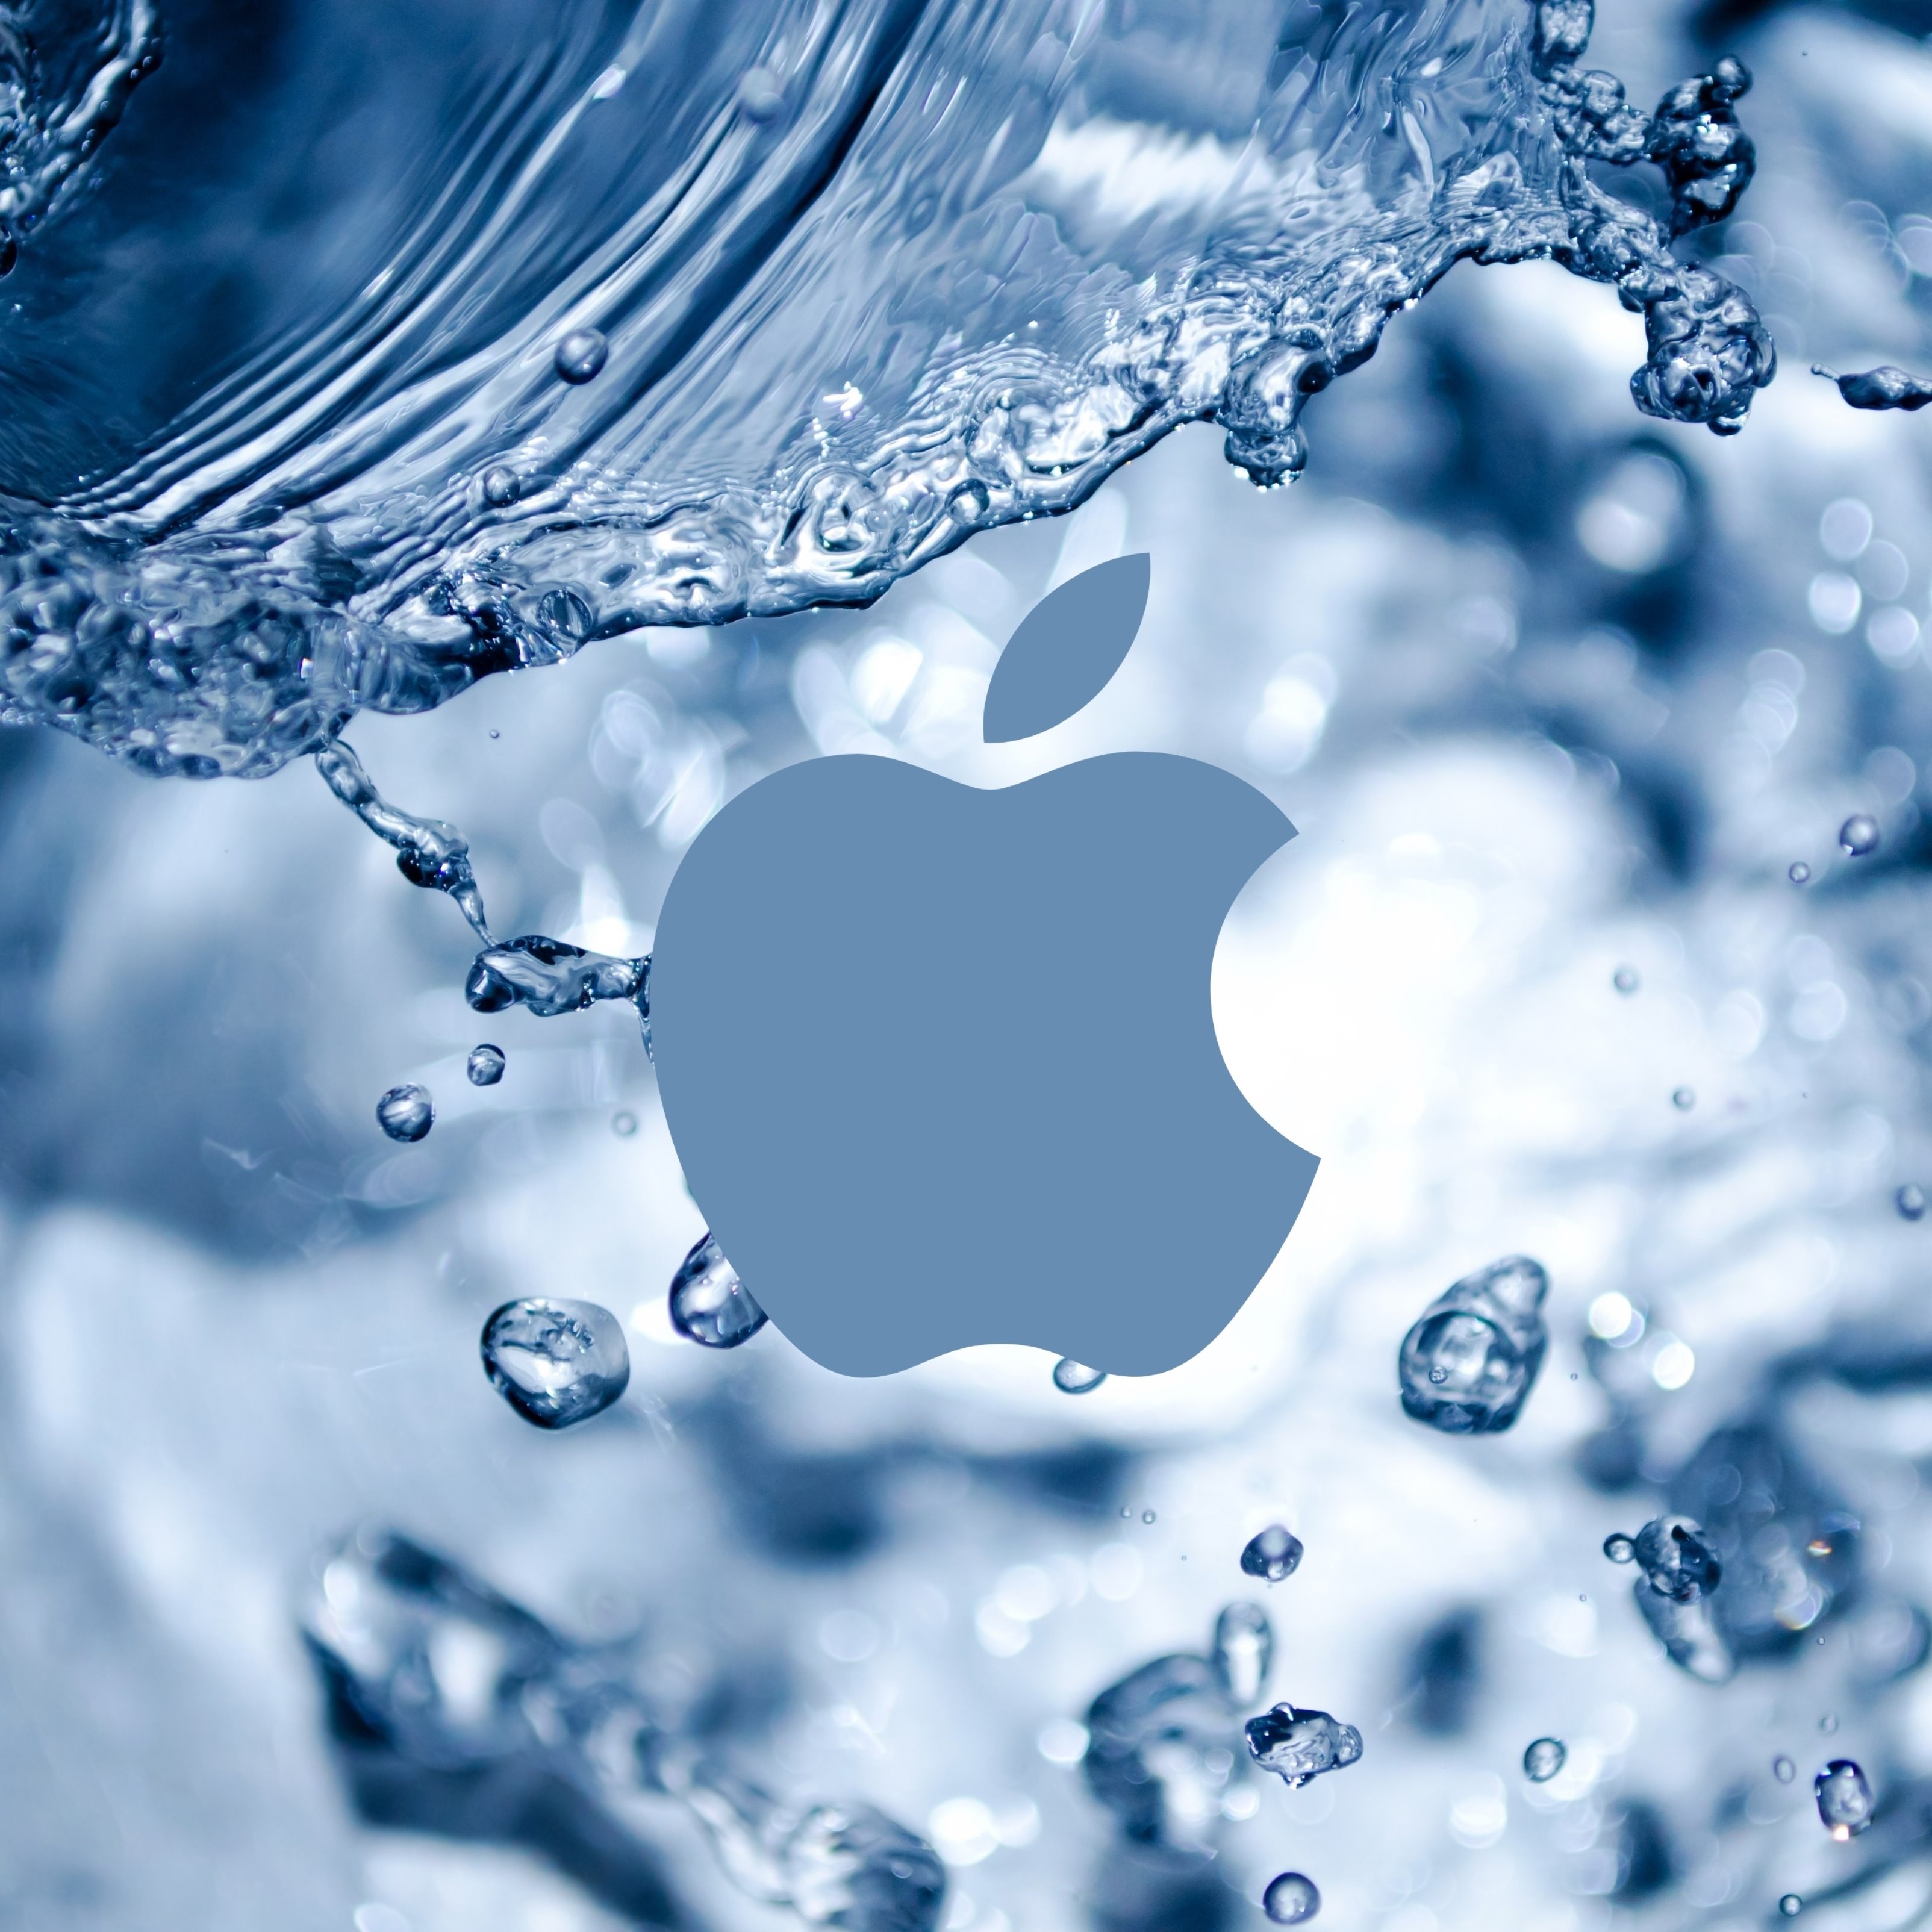 iPad Wallpapers Grey Apple Logo Water Splash iPad Wallpaper 3208x3208 px